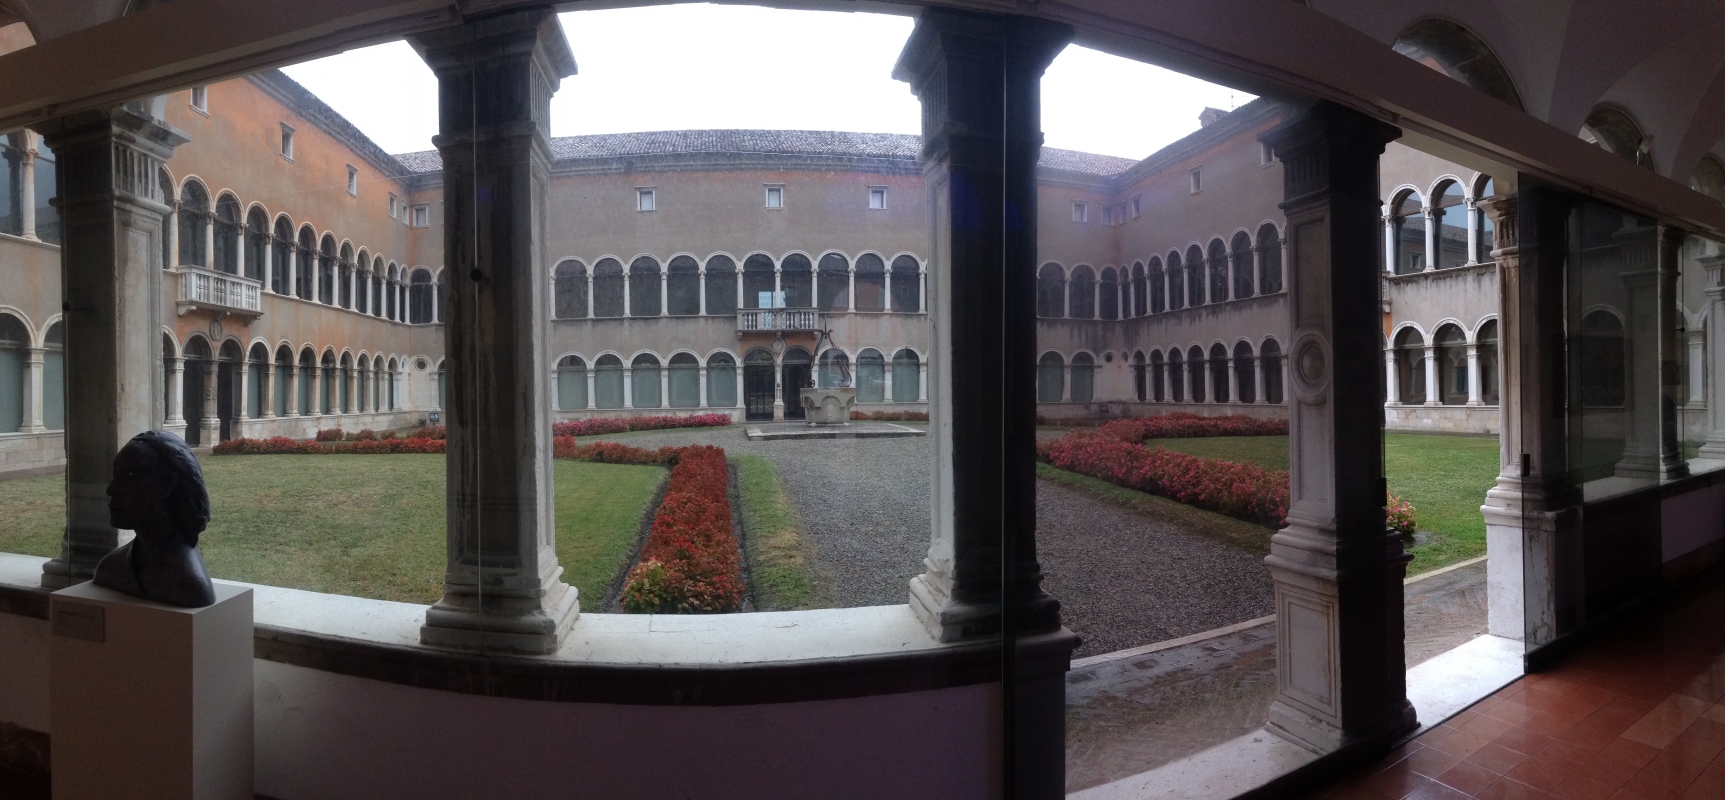 MAR interno foto di C.Grassadonia - Chiara.Ravenna